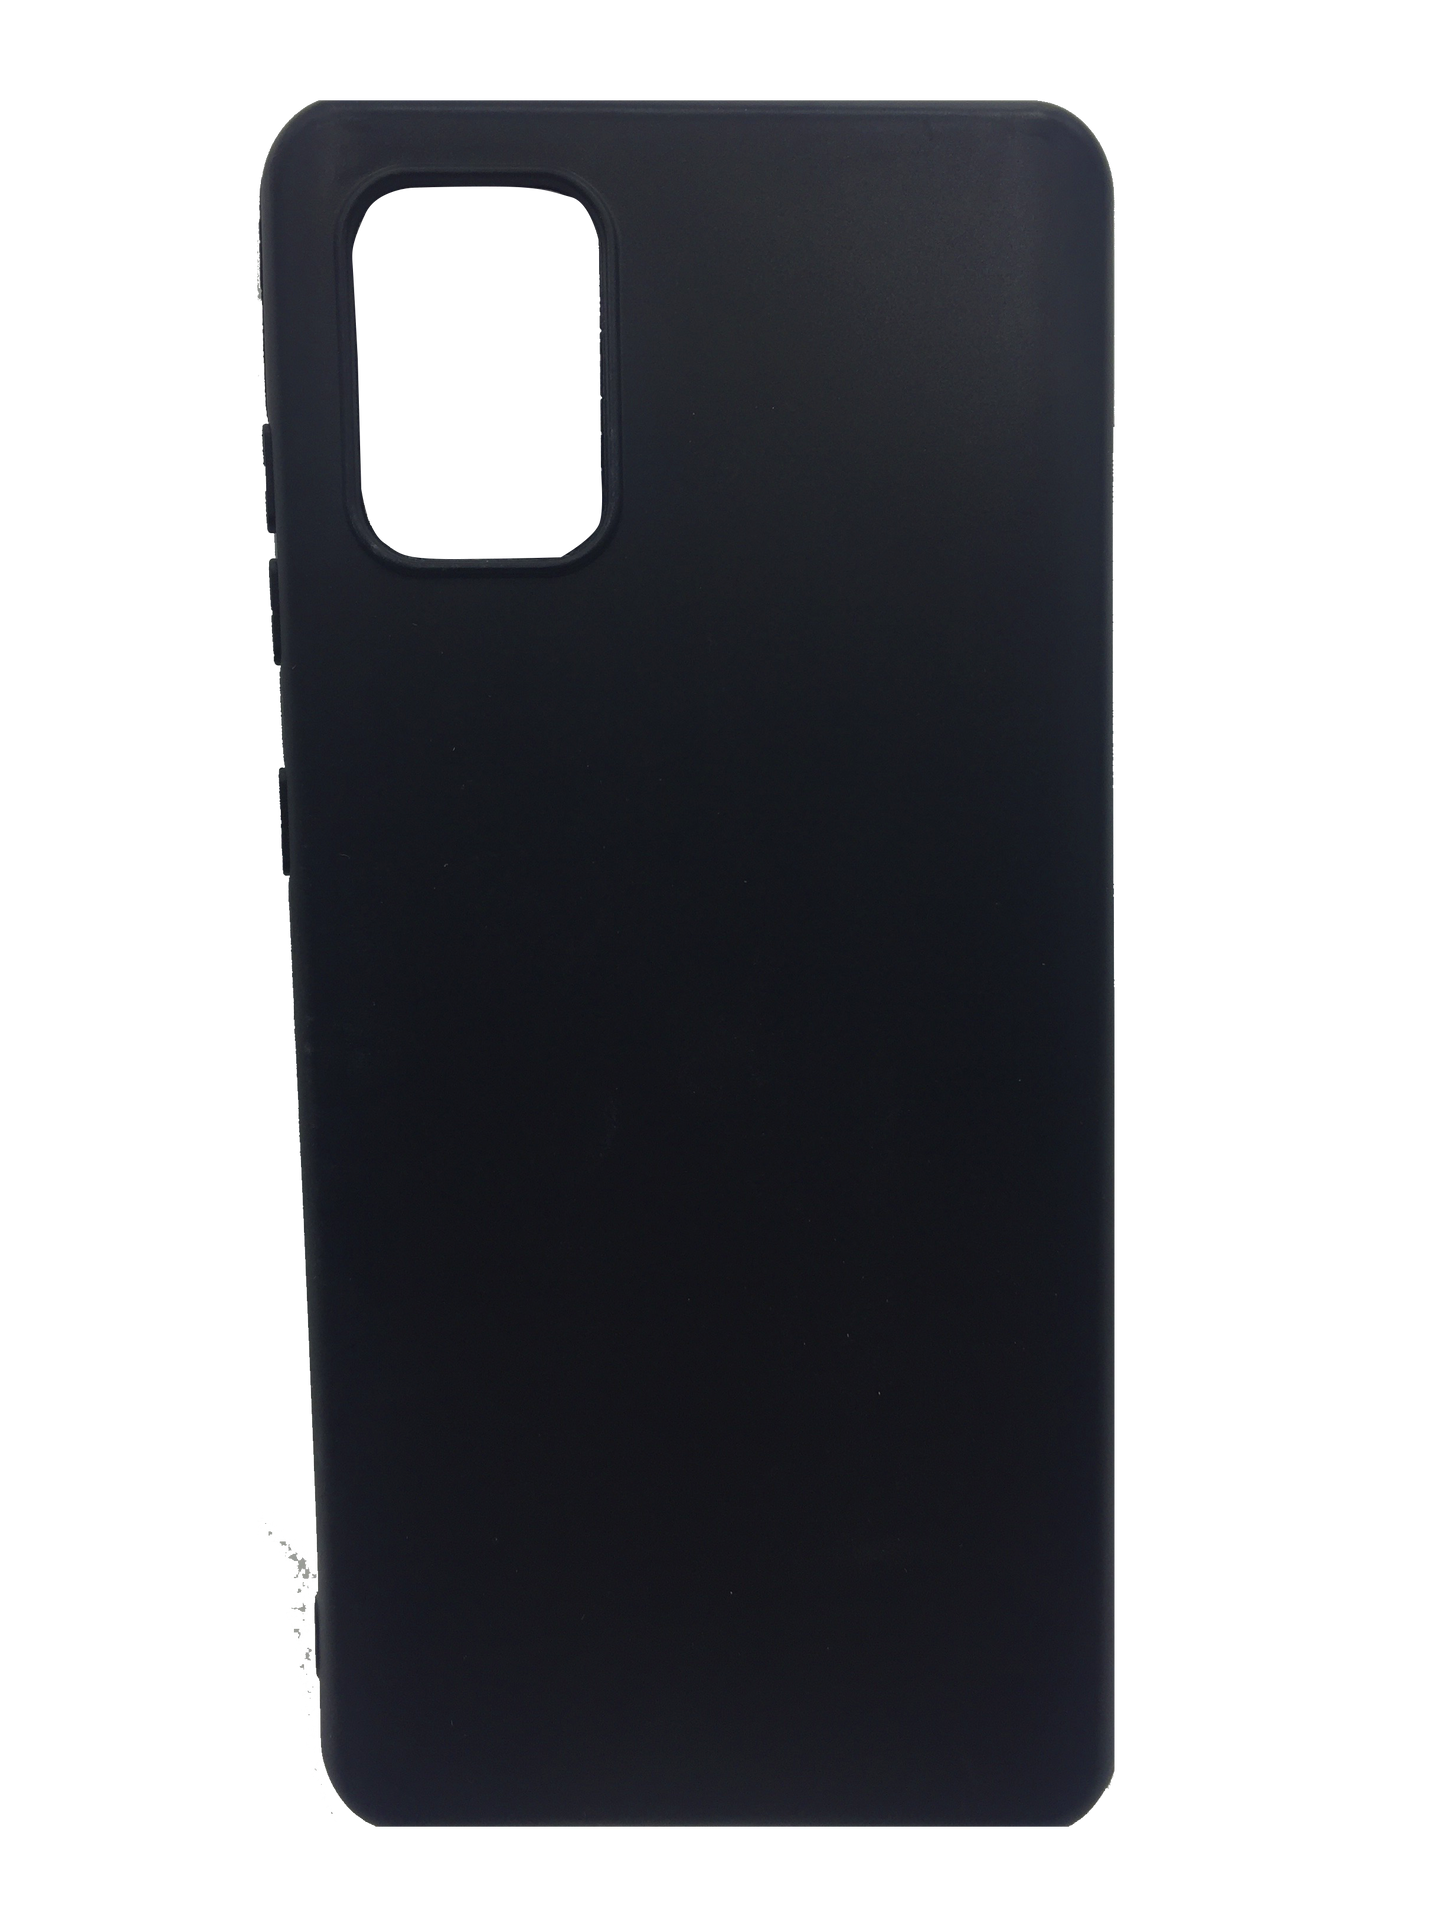 Silicone case Samsung A71 BLACK